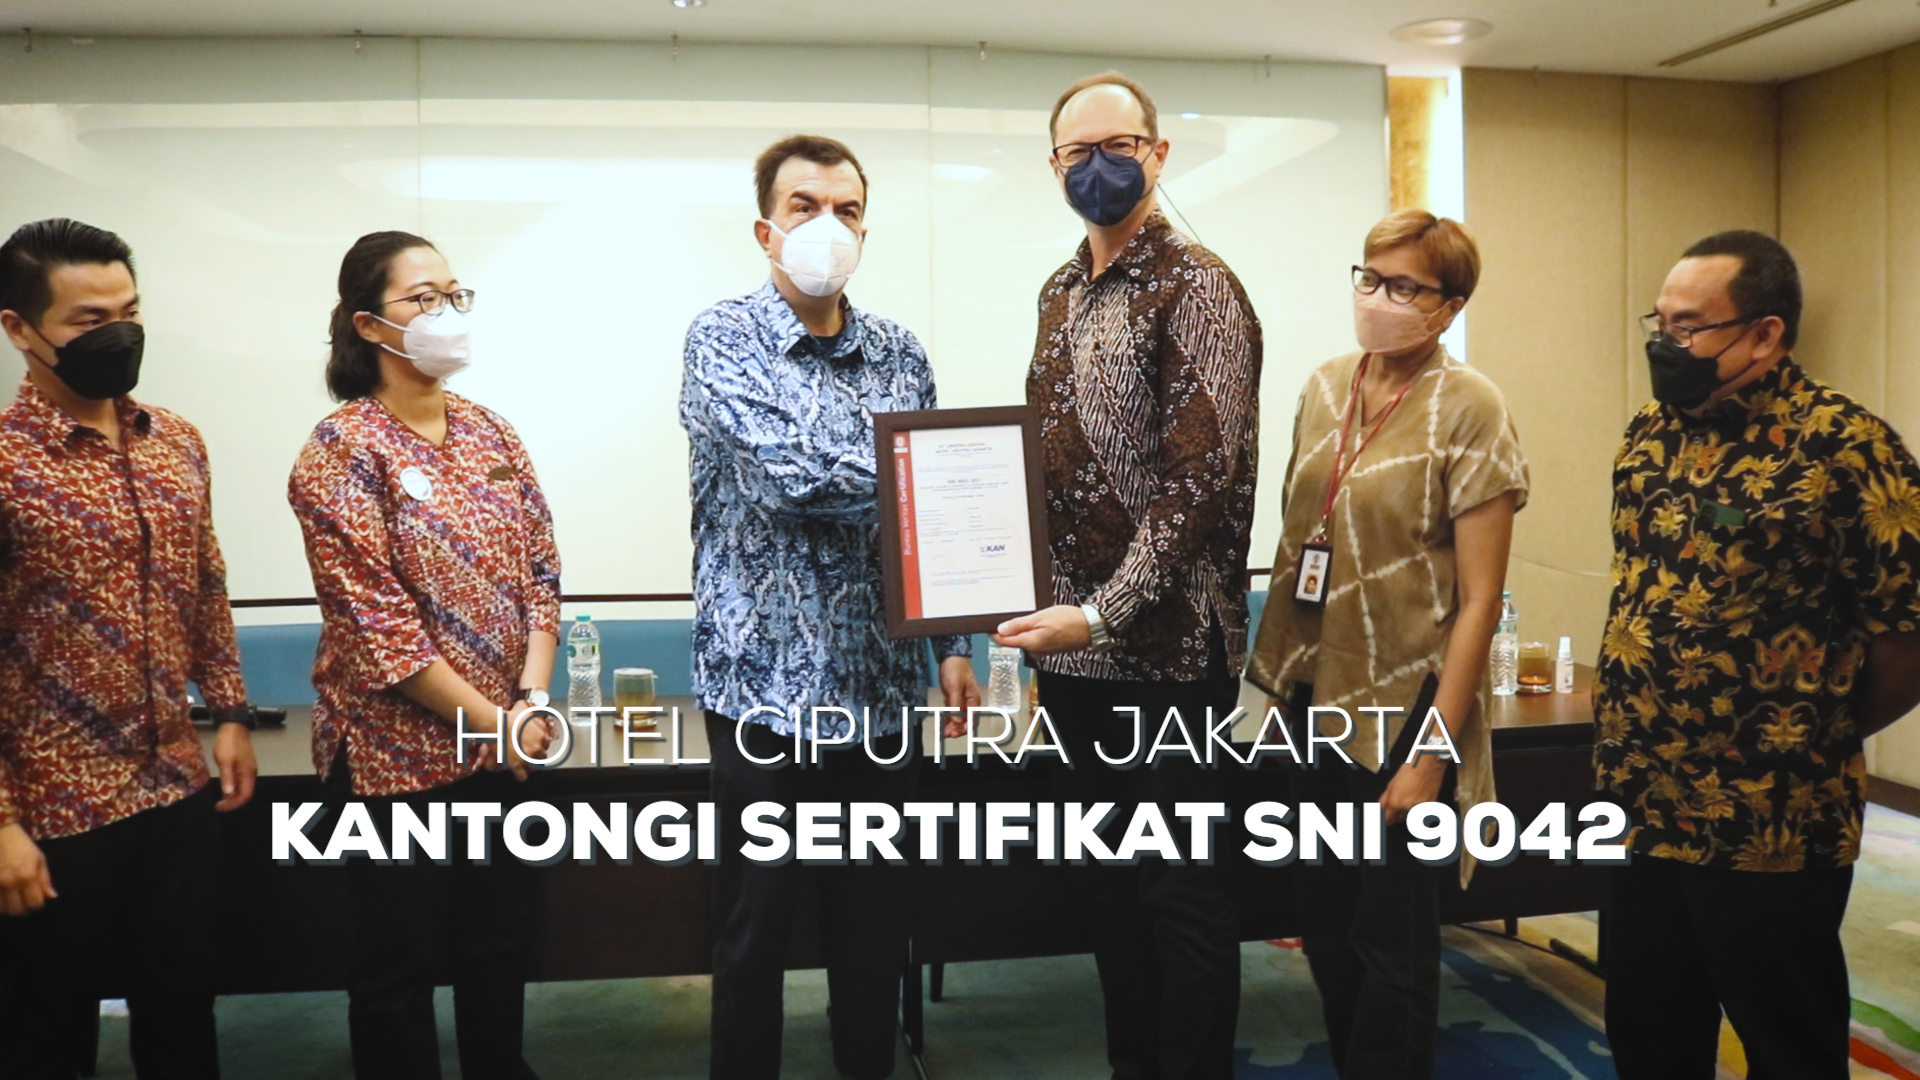 Hotel Ciputra Jakarta resmi mengantongi sertifikat CHSE SNI 9042:2021. (Alidrian Fahwi/ipol.id)